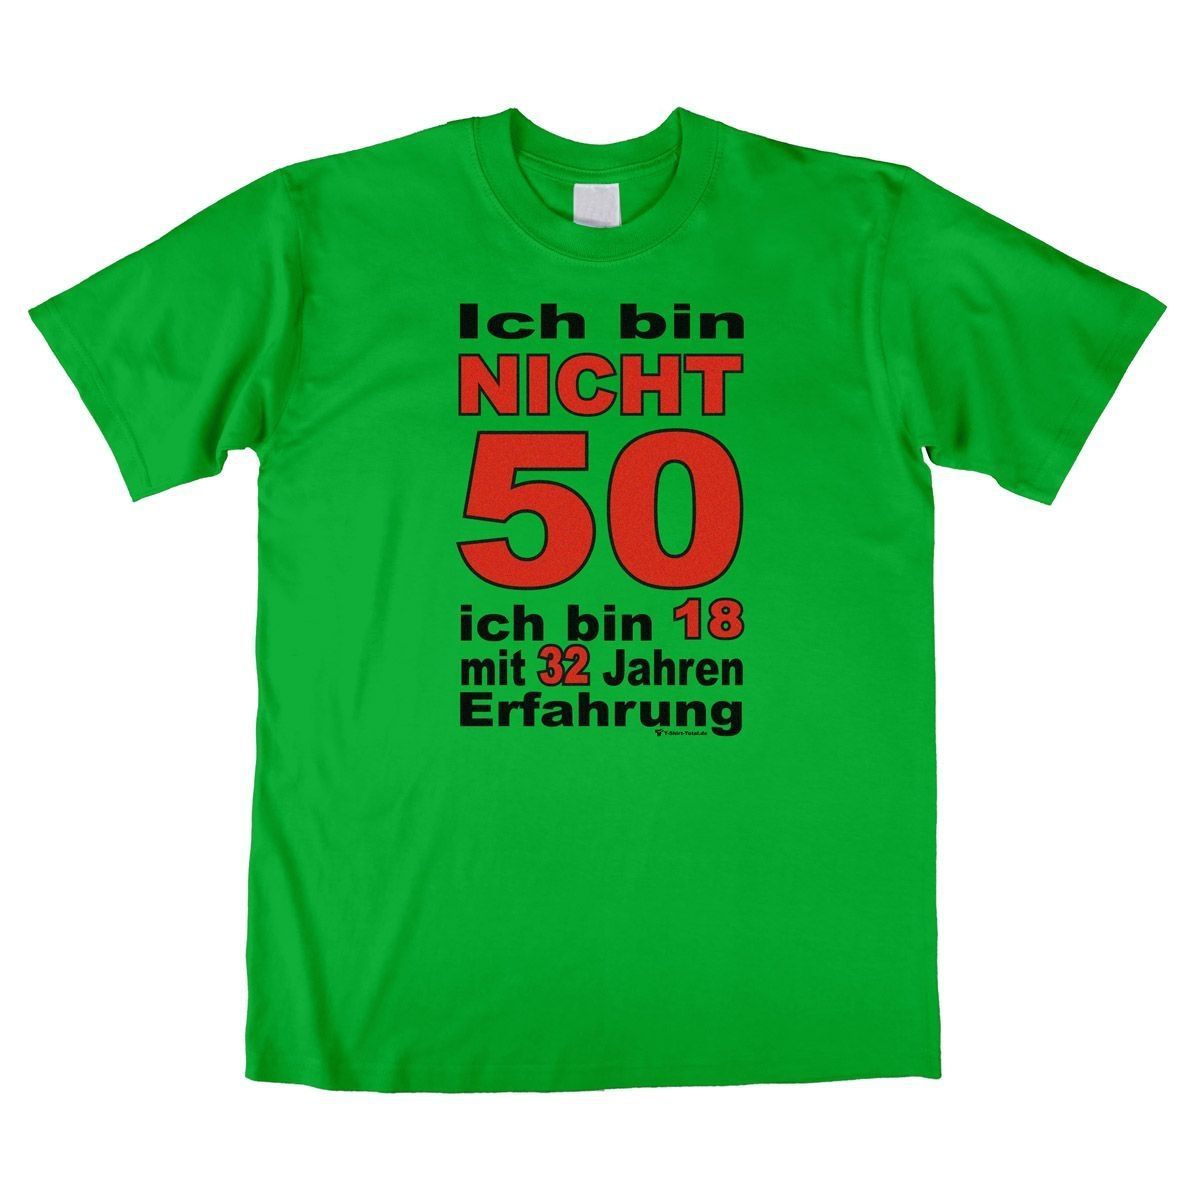 Bin nicht 50 Unisex T-Shirt grün Large